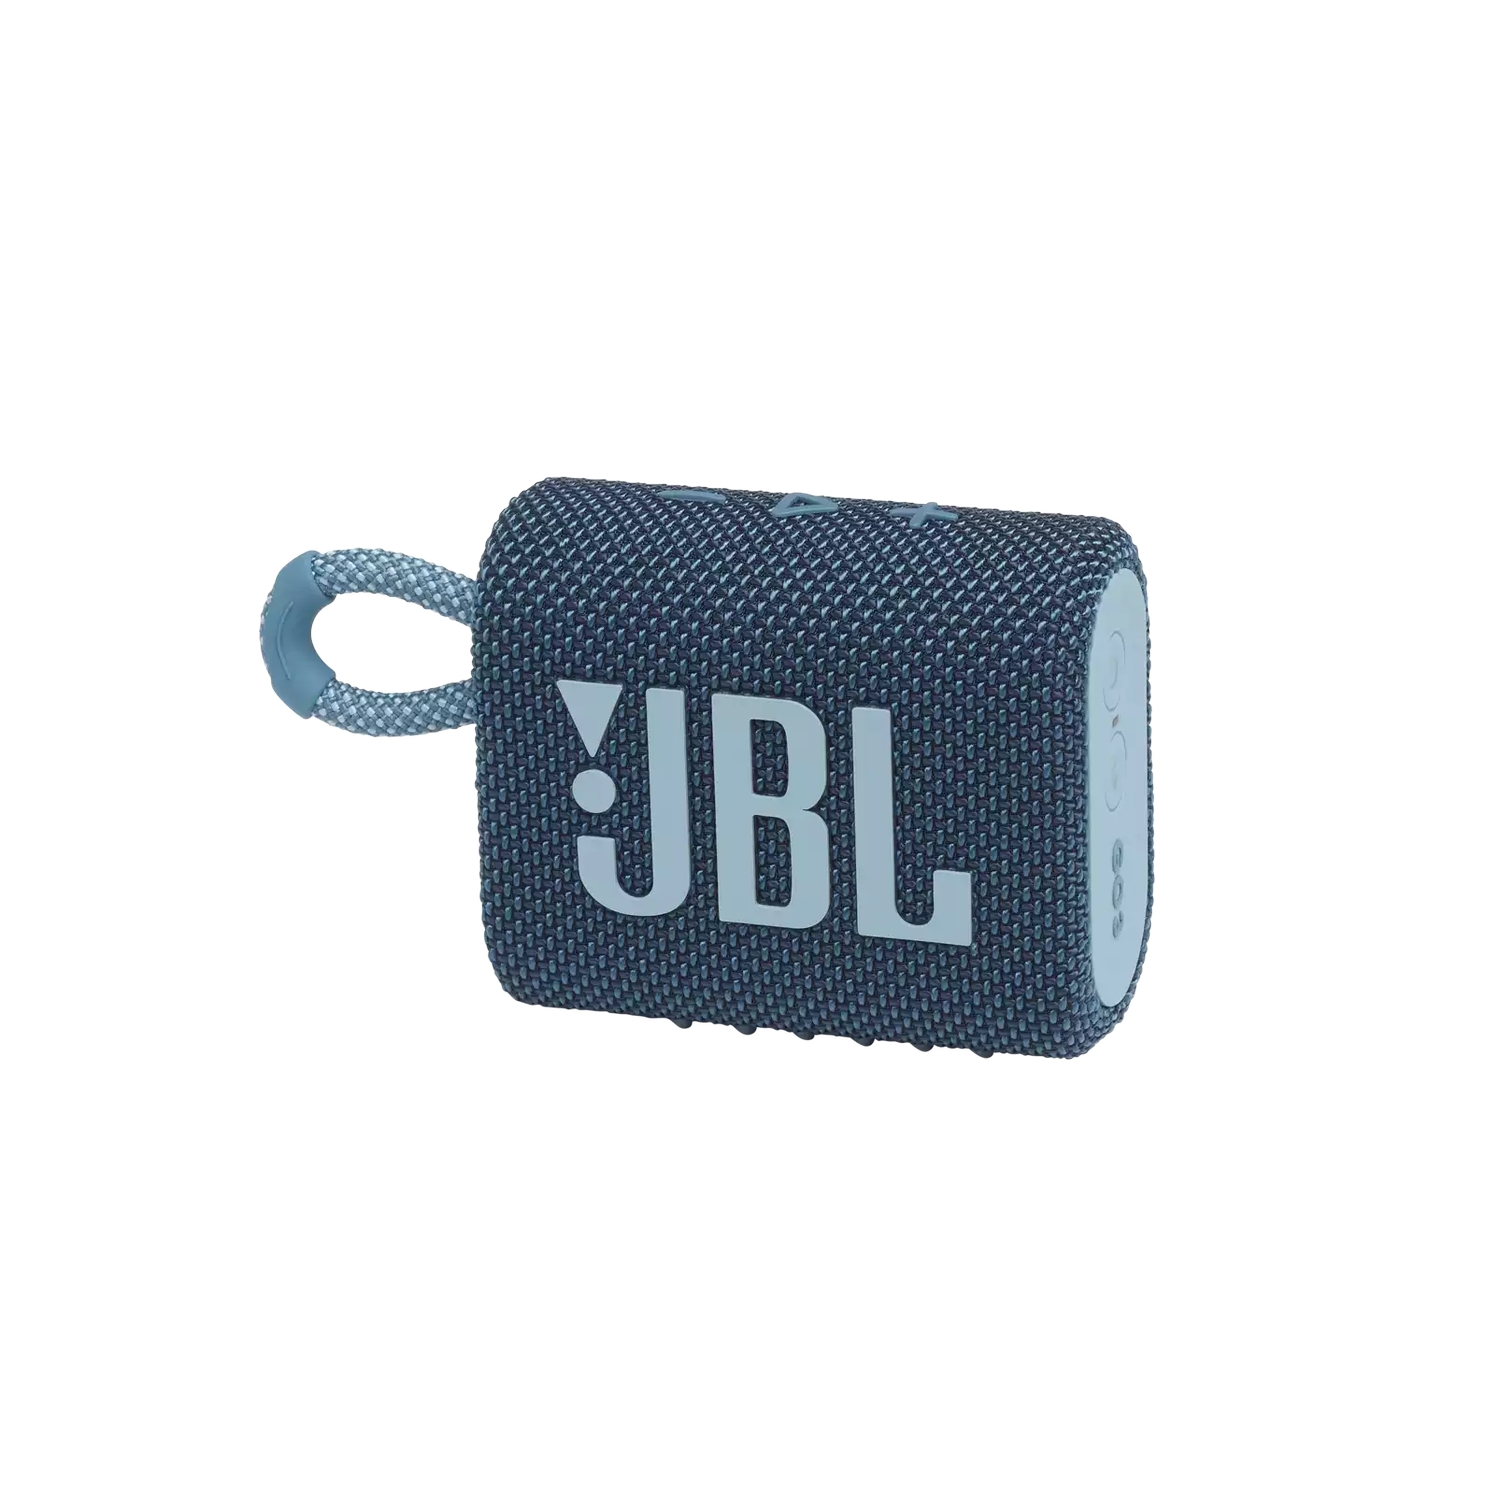 Портативная акустика JBL GO 3 Blue портативная акустика jbl go 3 бирюзовая